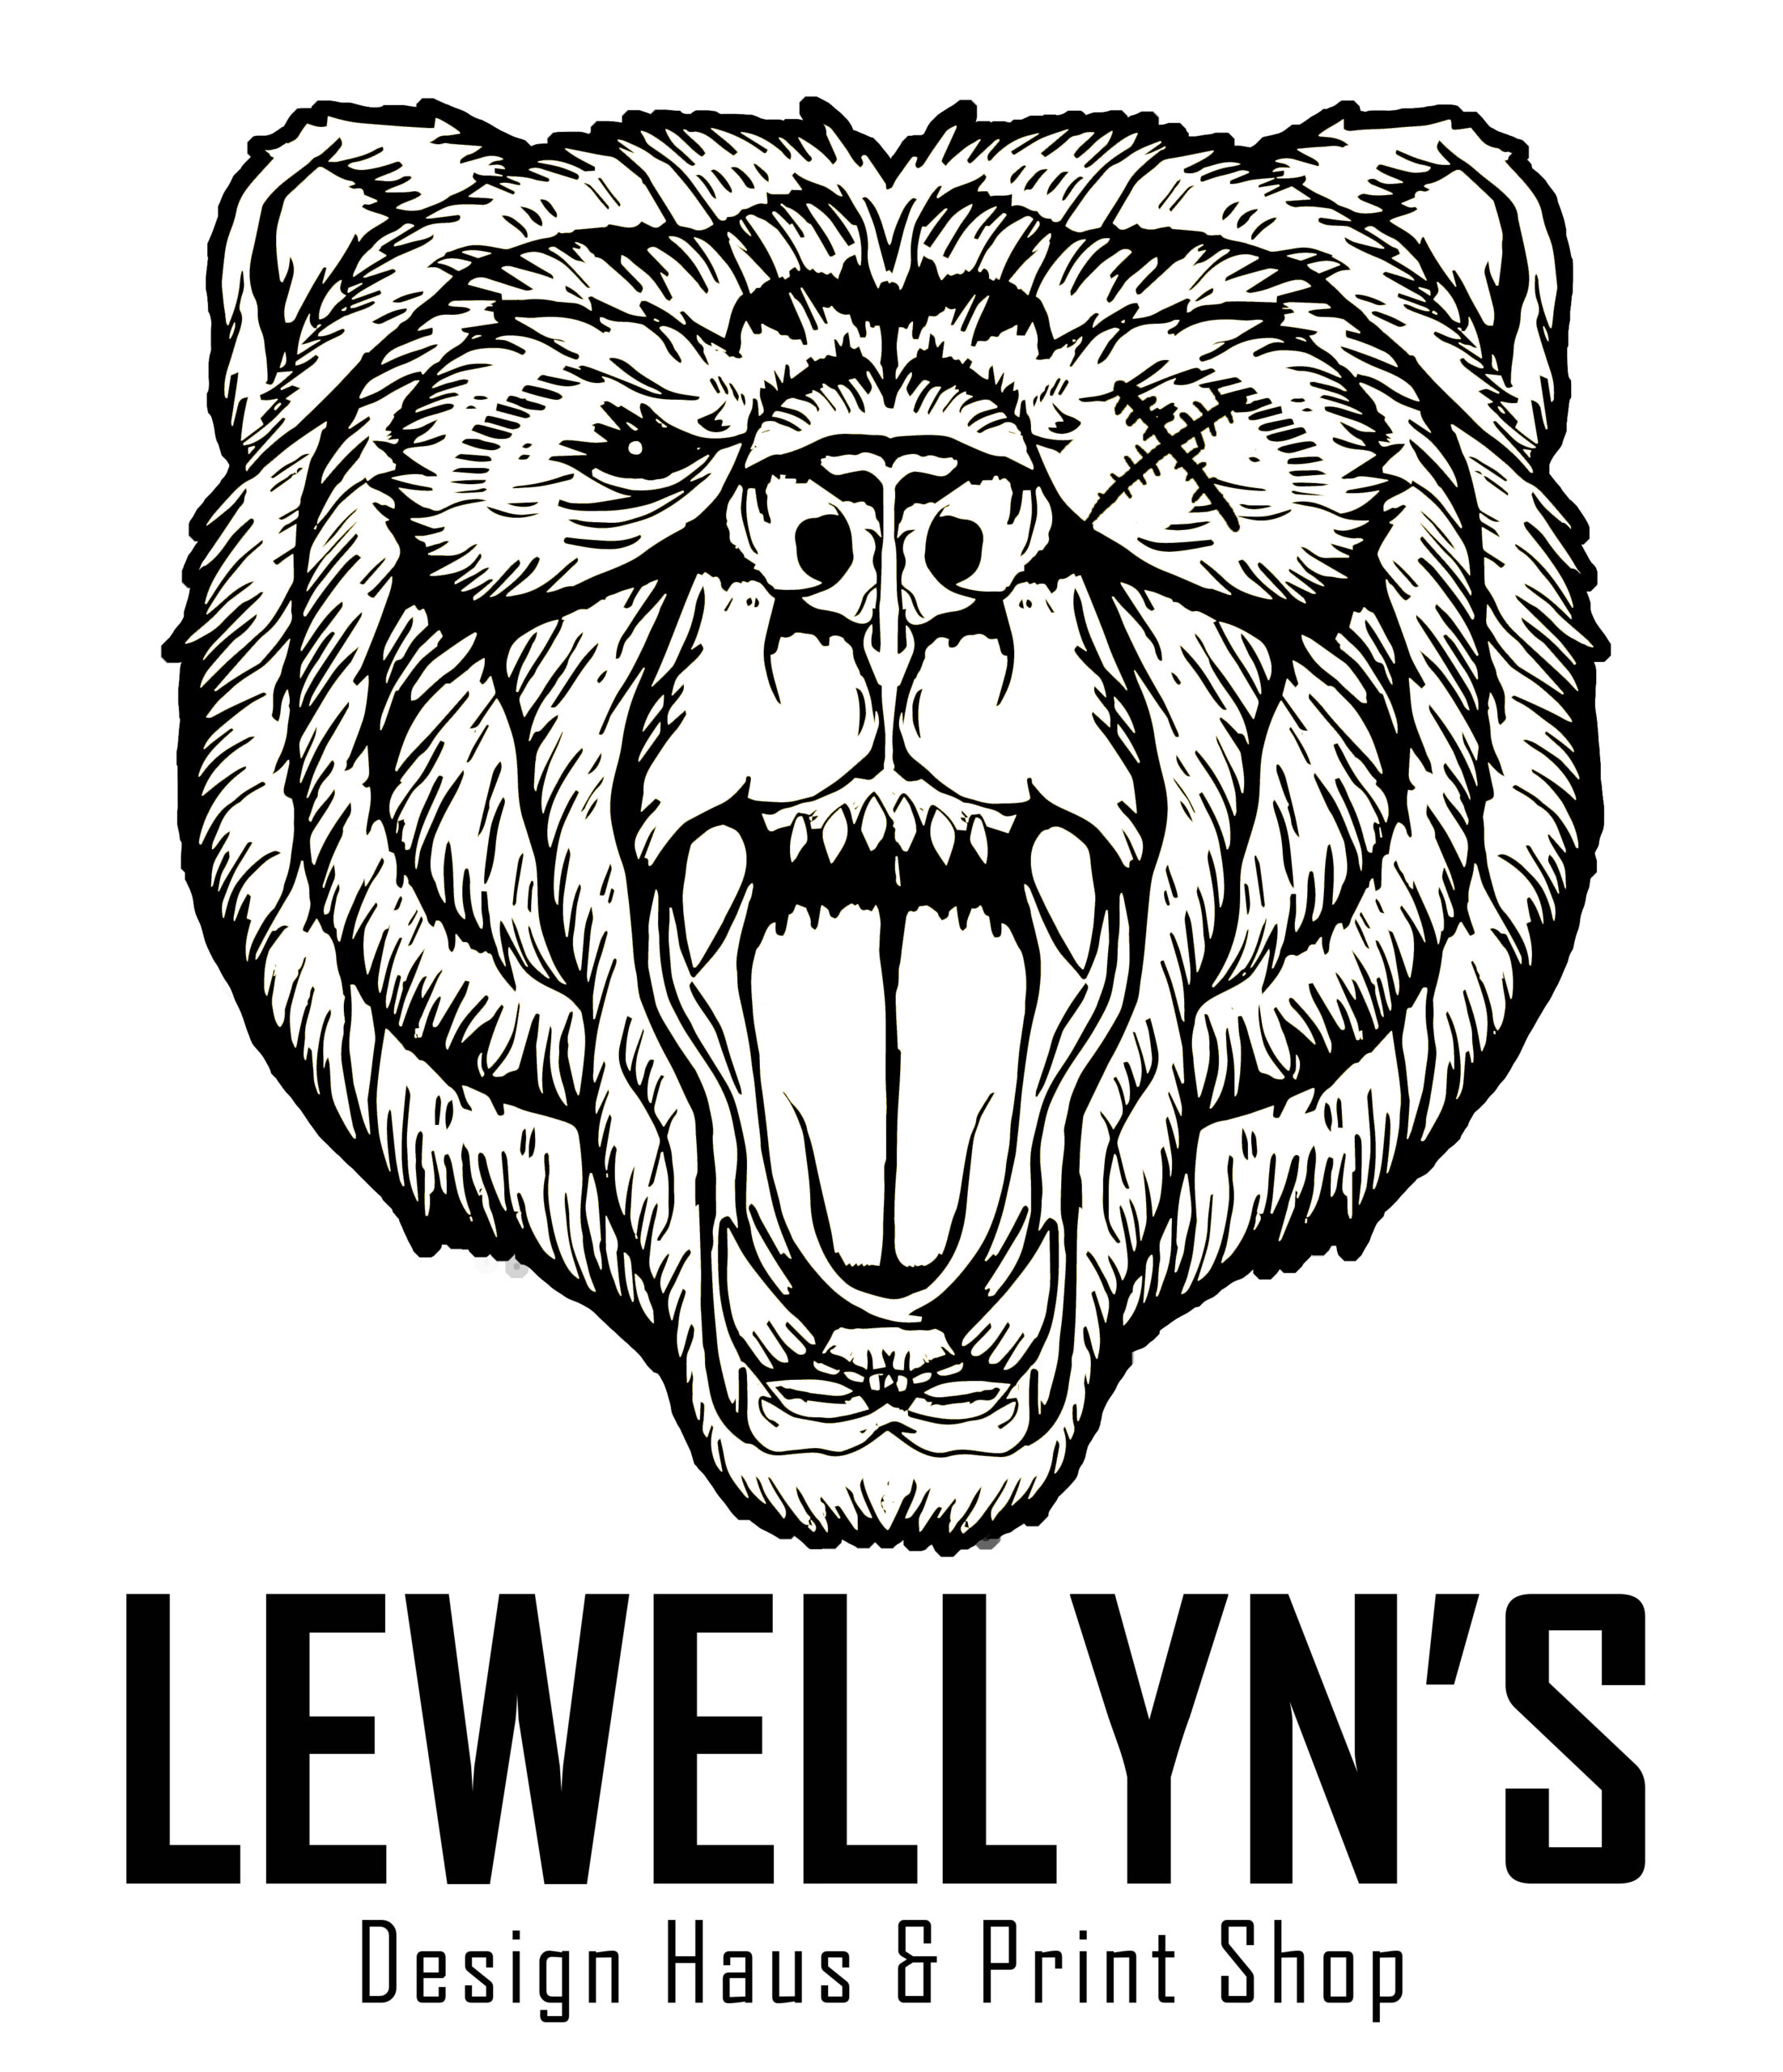  Lewellyn's Print Shop 